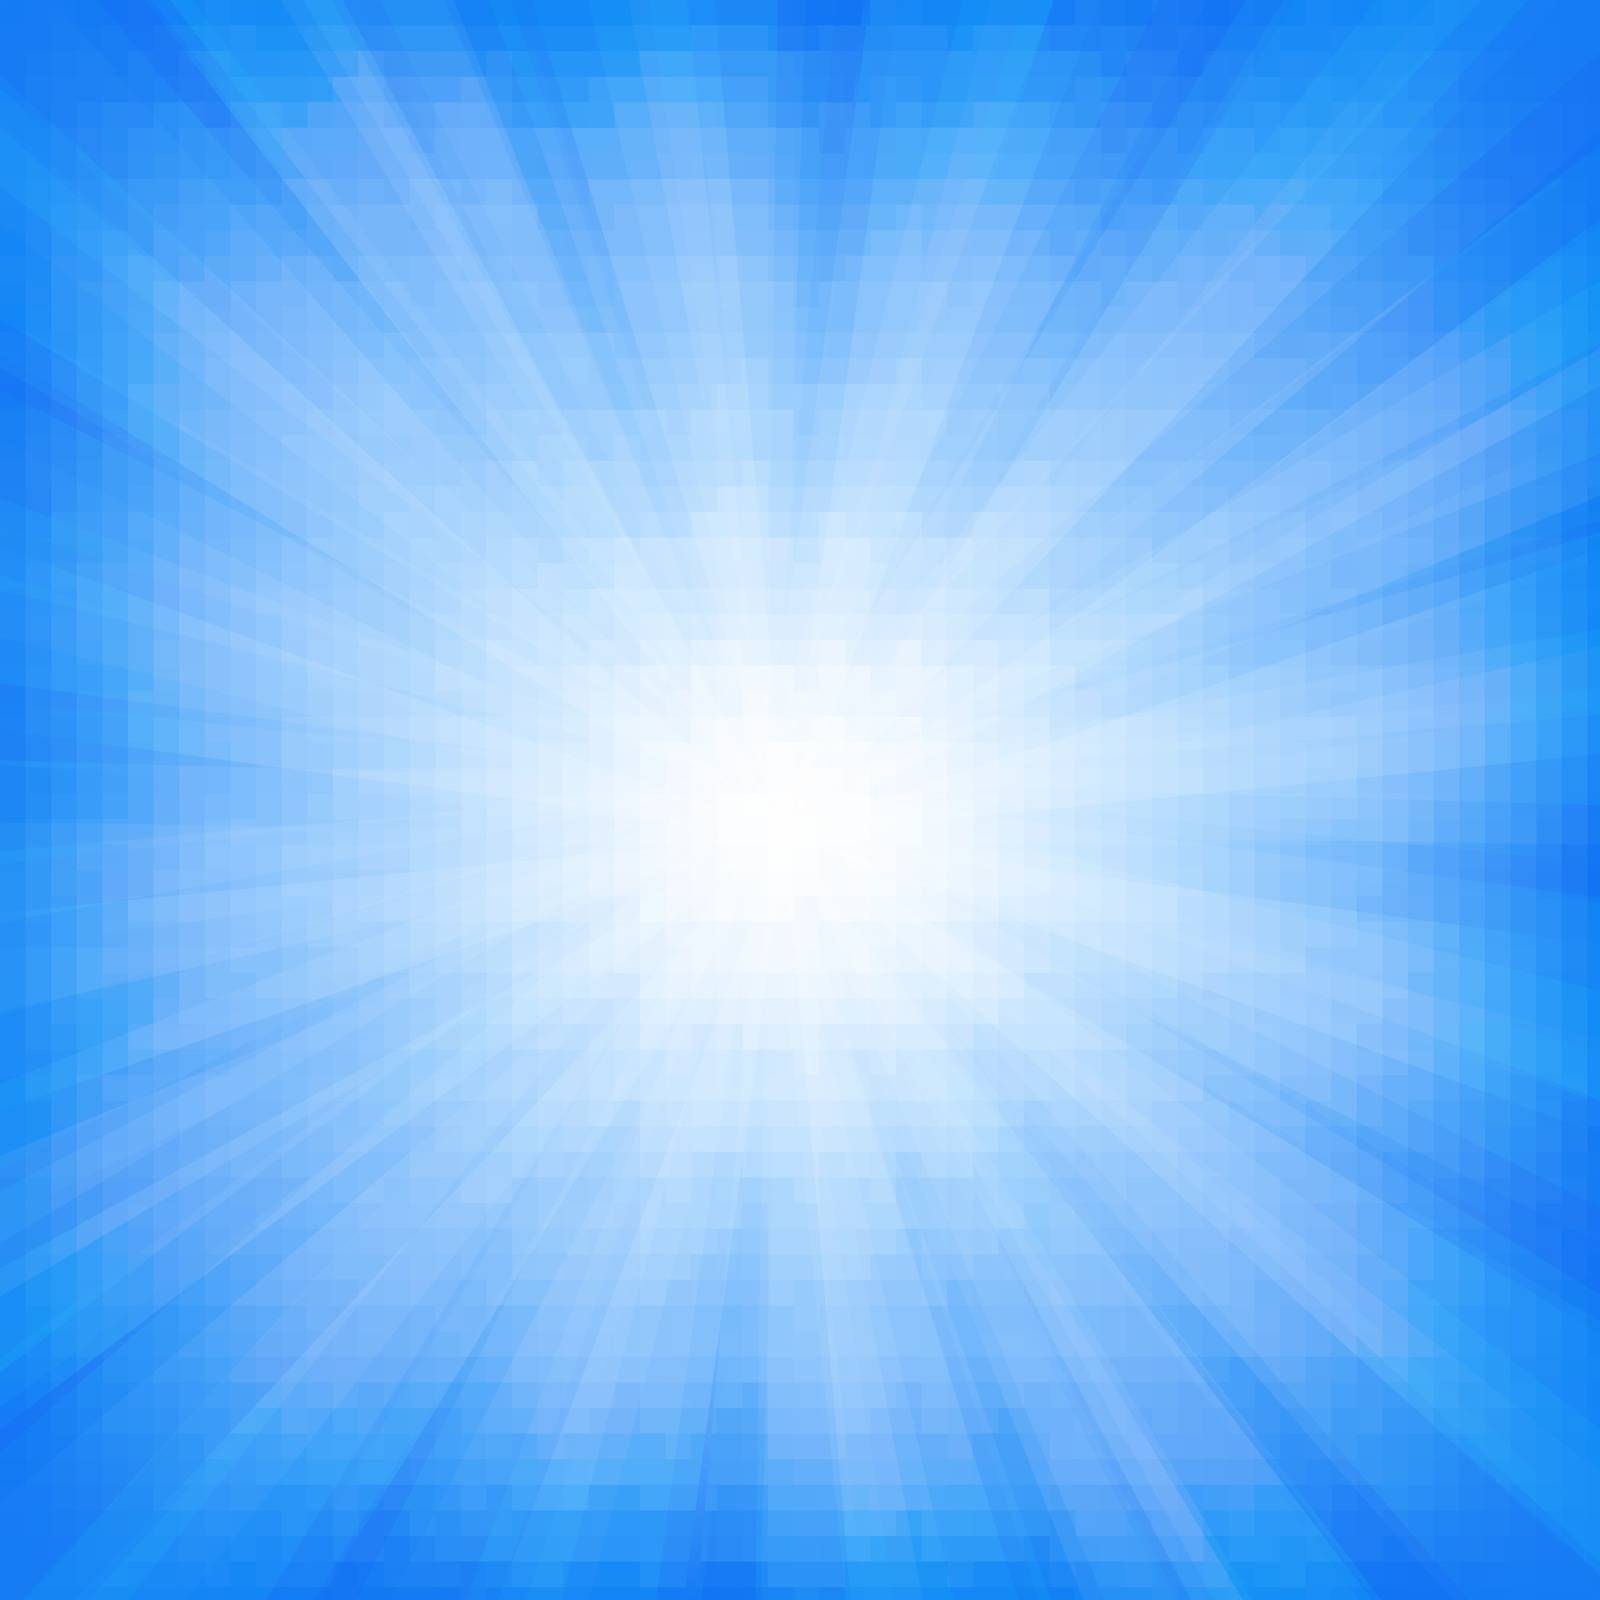 Blue Sunburst Background With Gradient Mesh, Vector Illustration